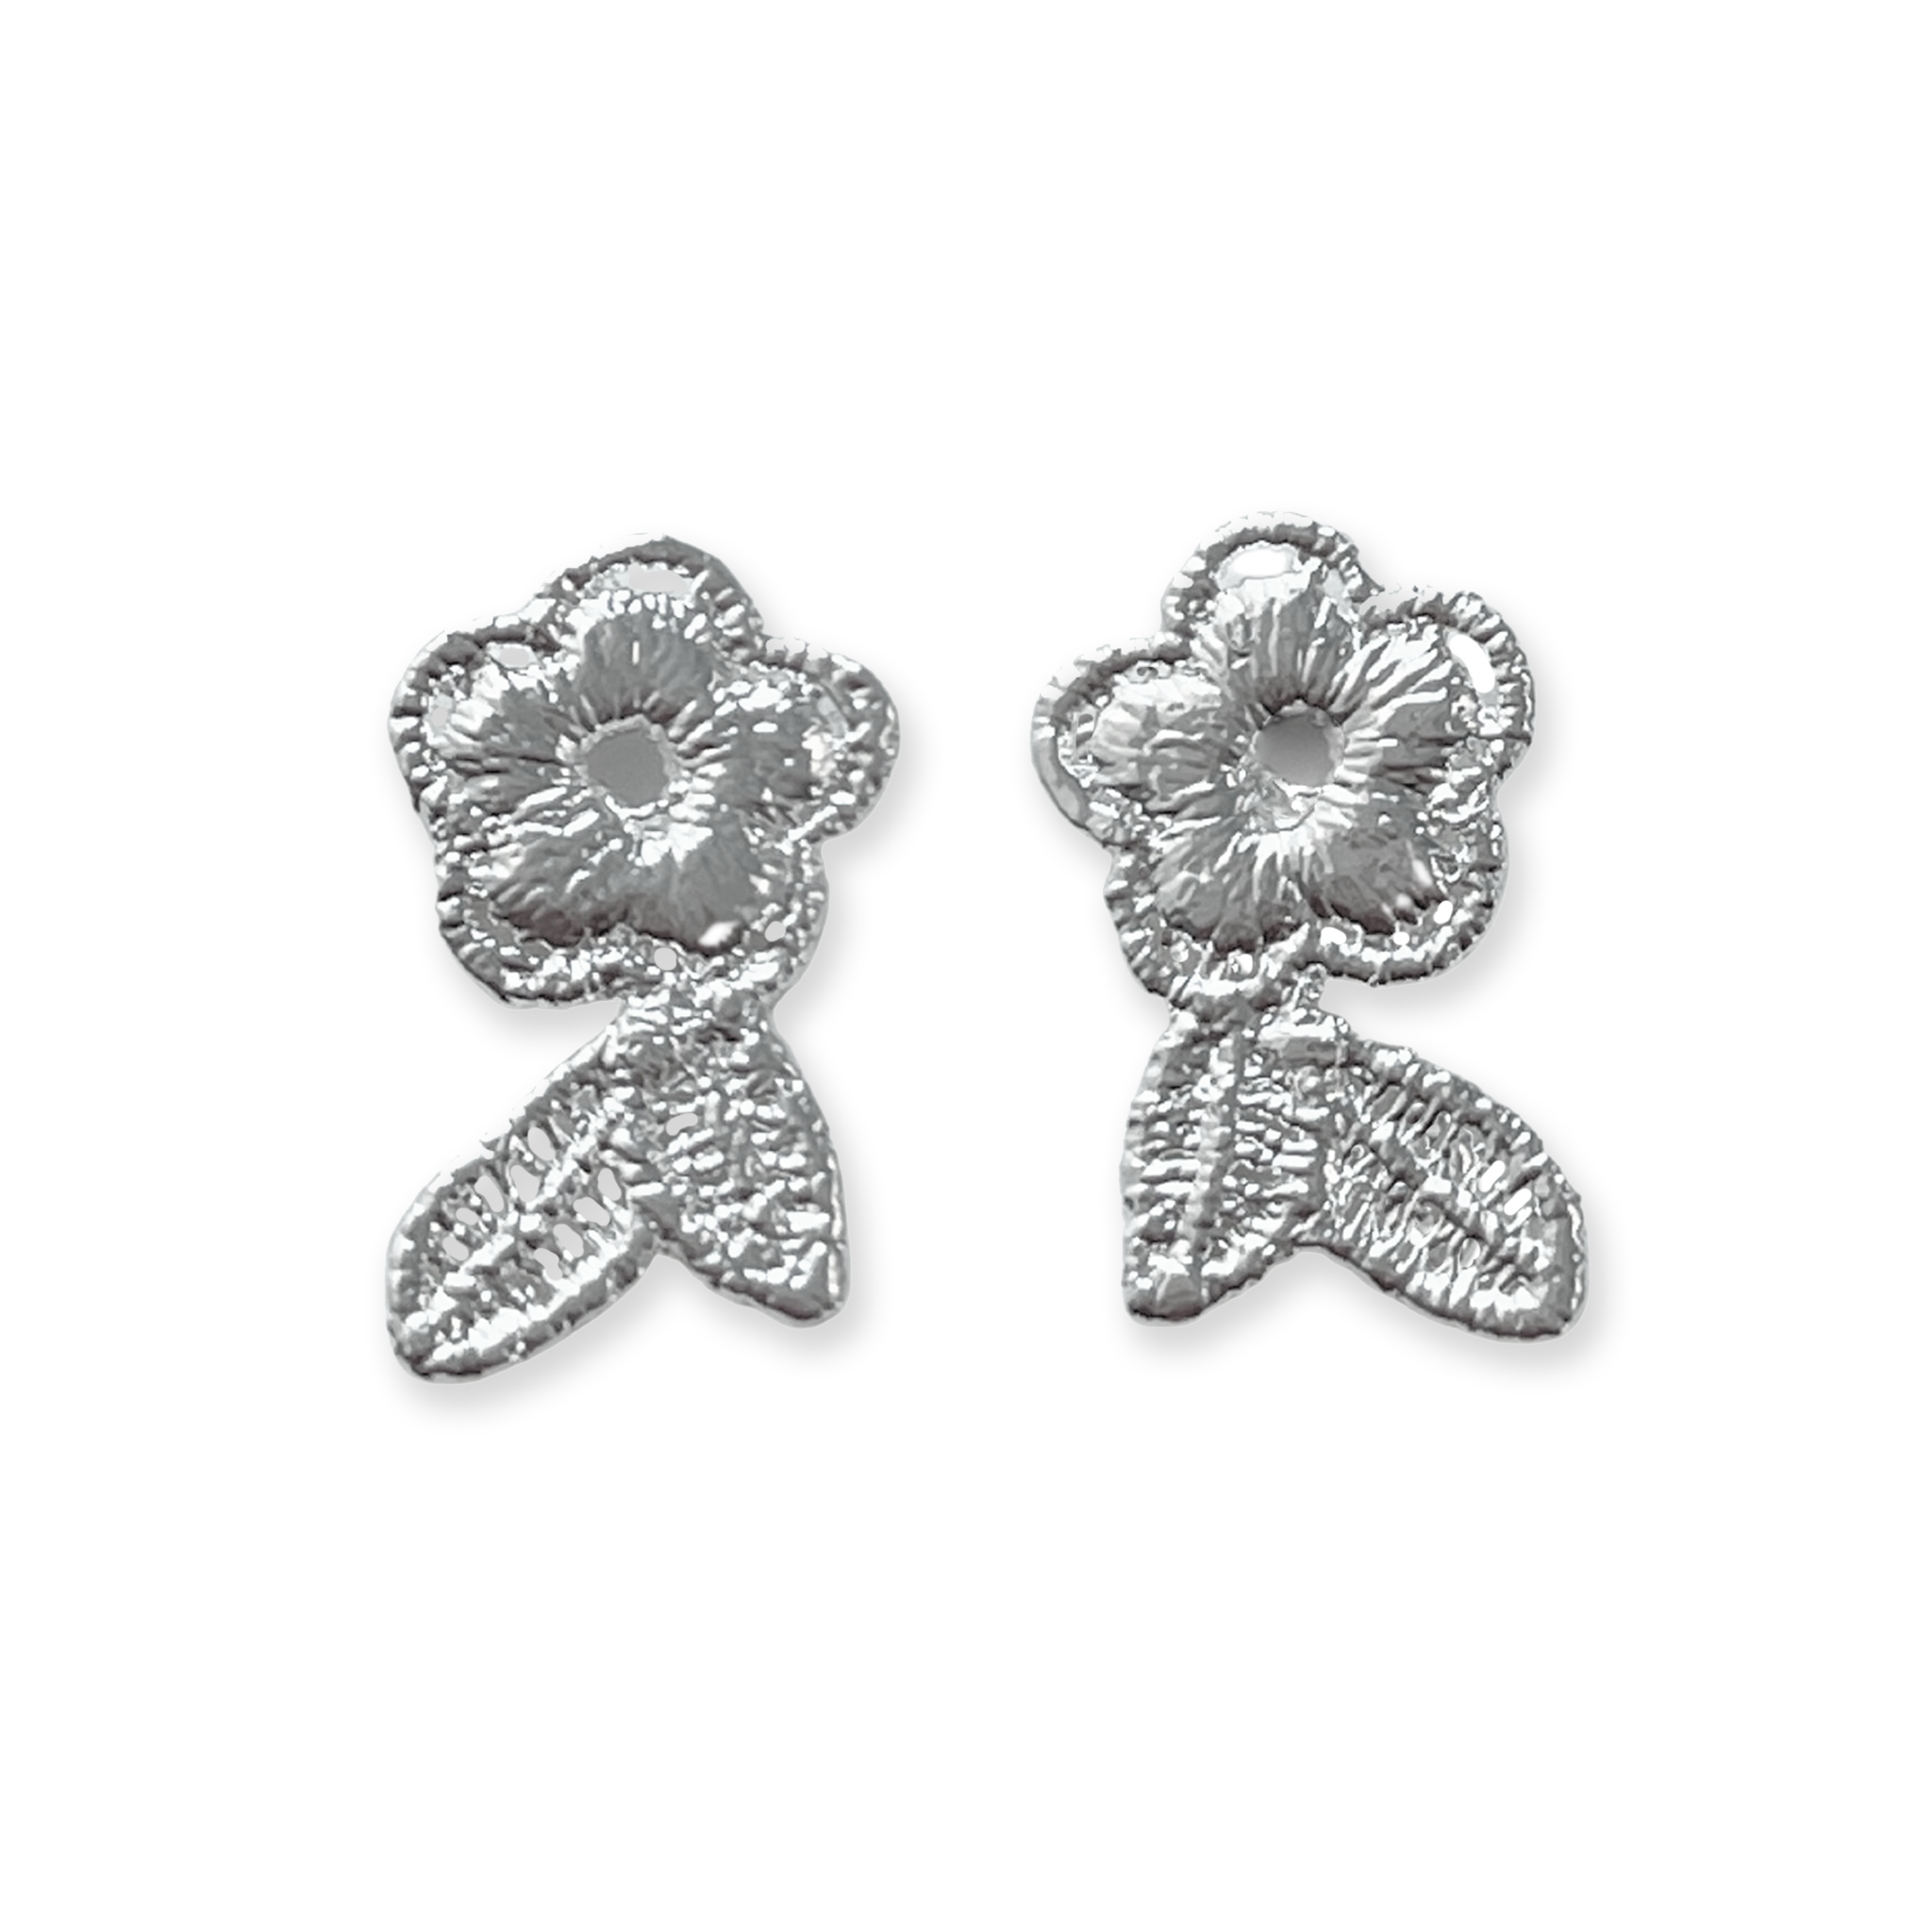 Ella Lace Flower Earrings in sterling silver and 24k gold - Monika Knutsson